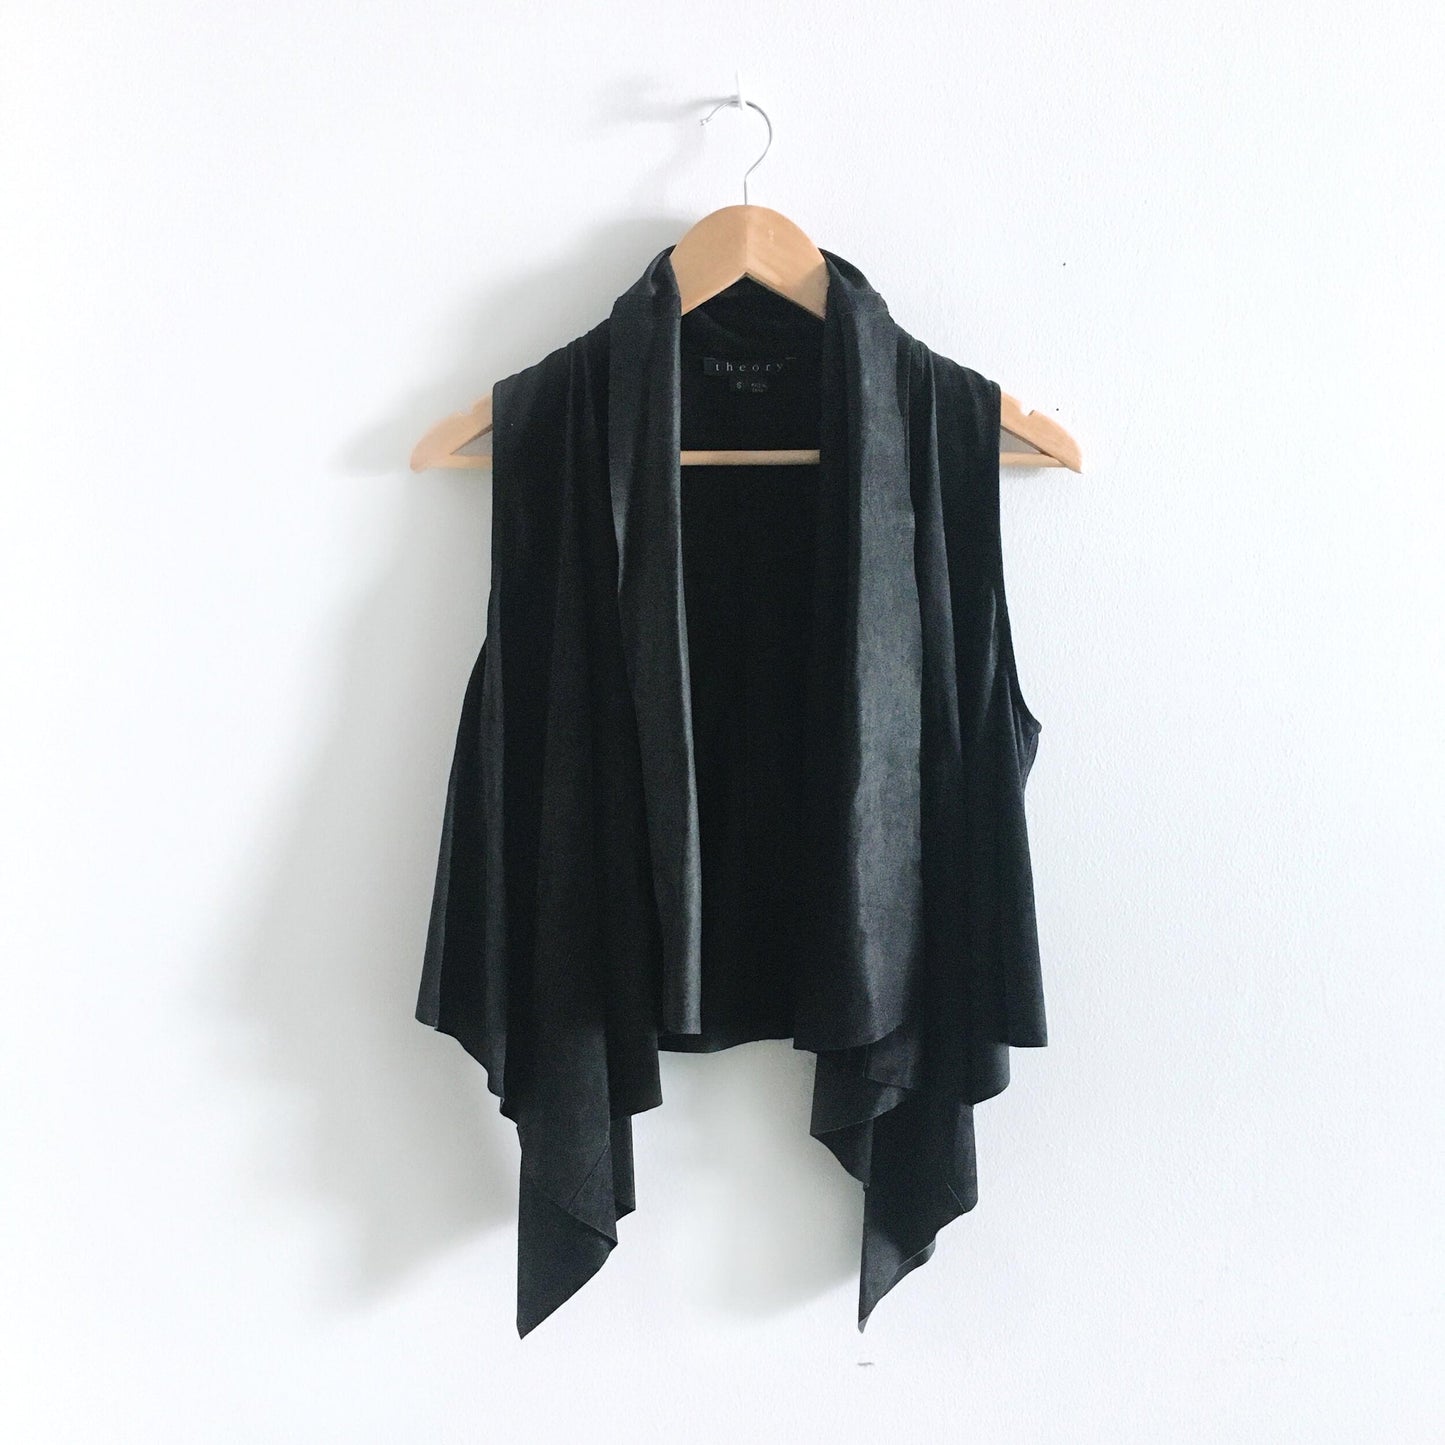 Theory draped leather Odelina vest - size Small